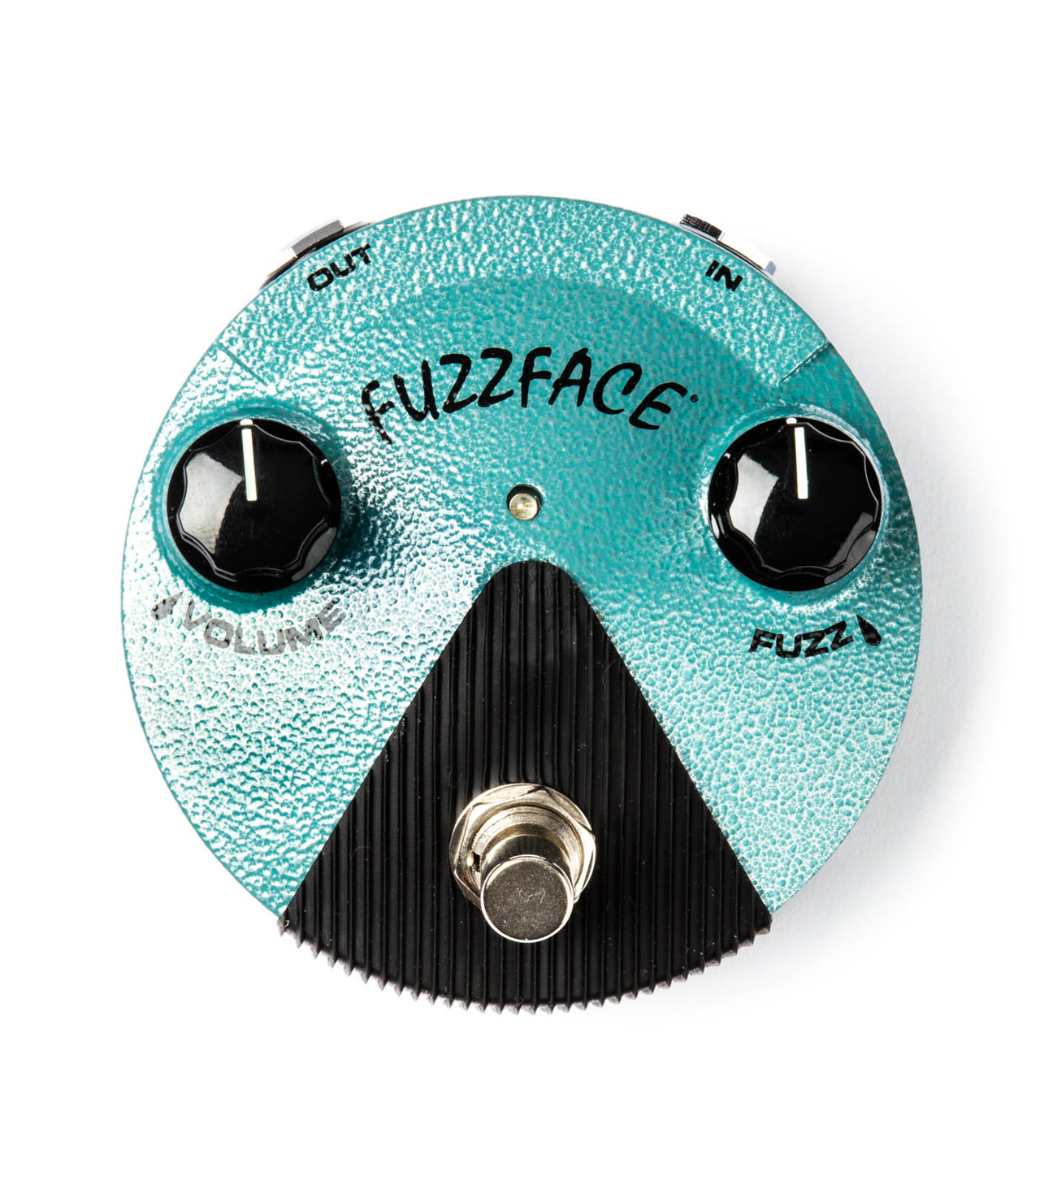 Dunlop Jimi Hendrix Fuzz Face Mini Pedal - Get Loud Music